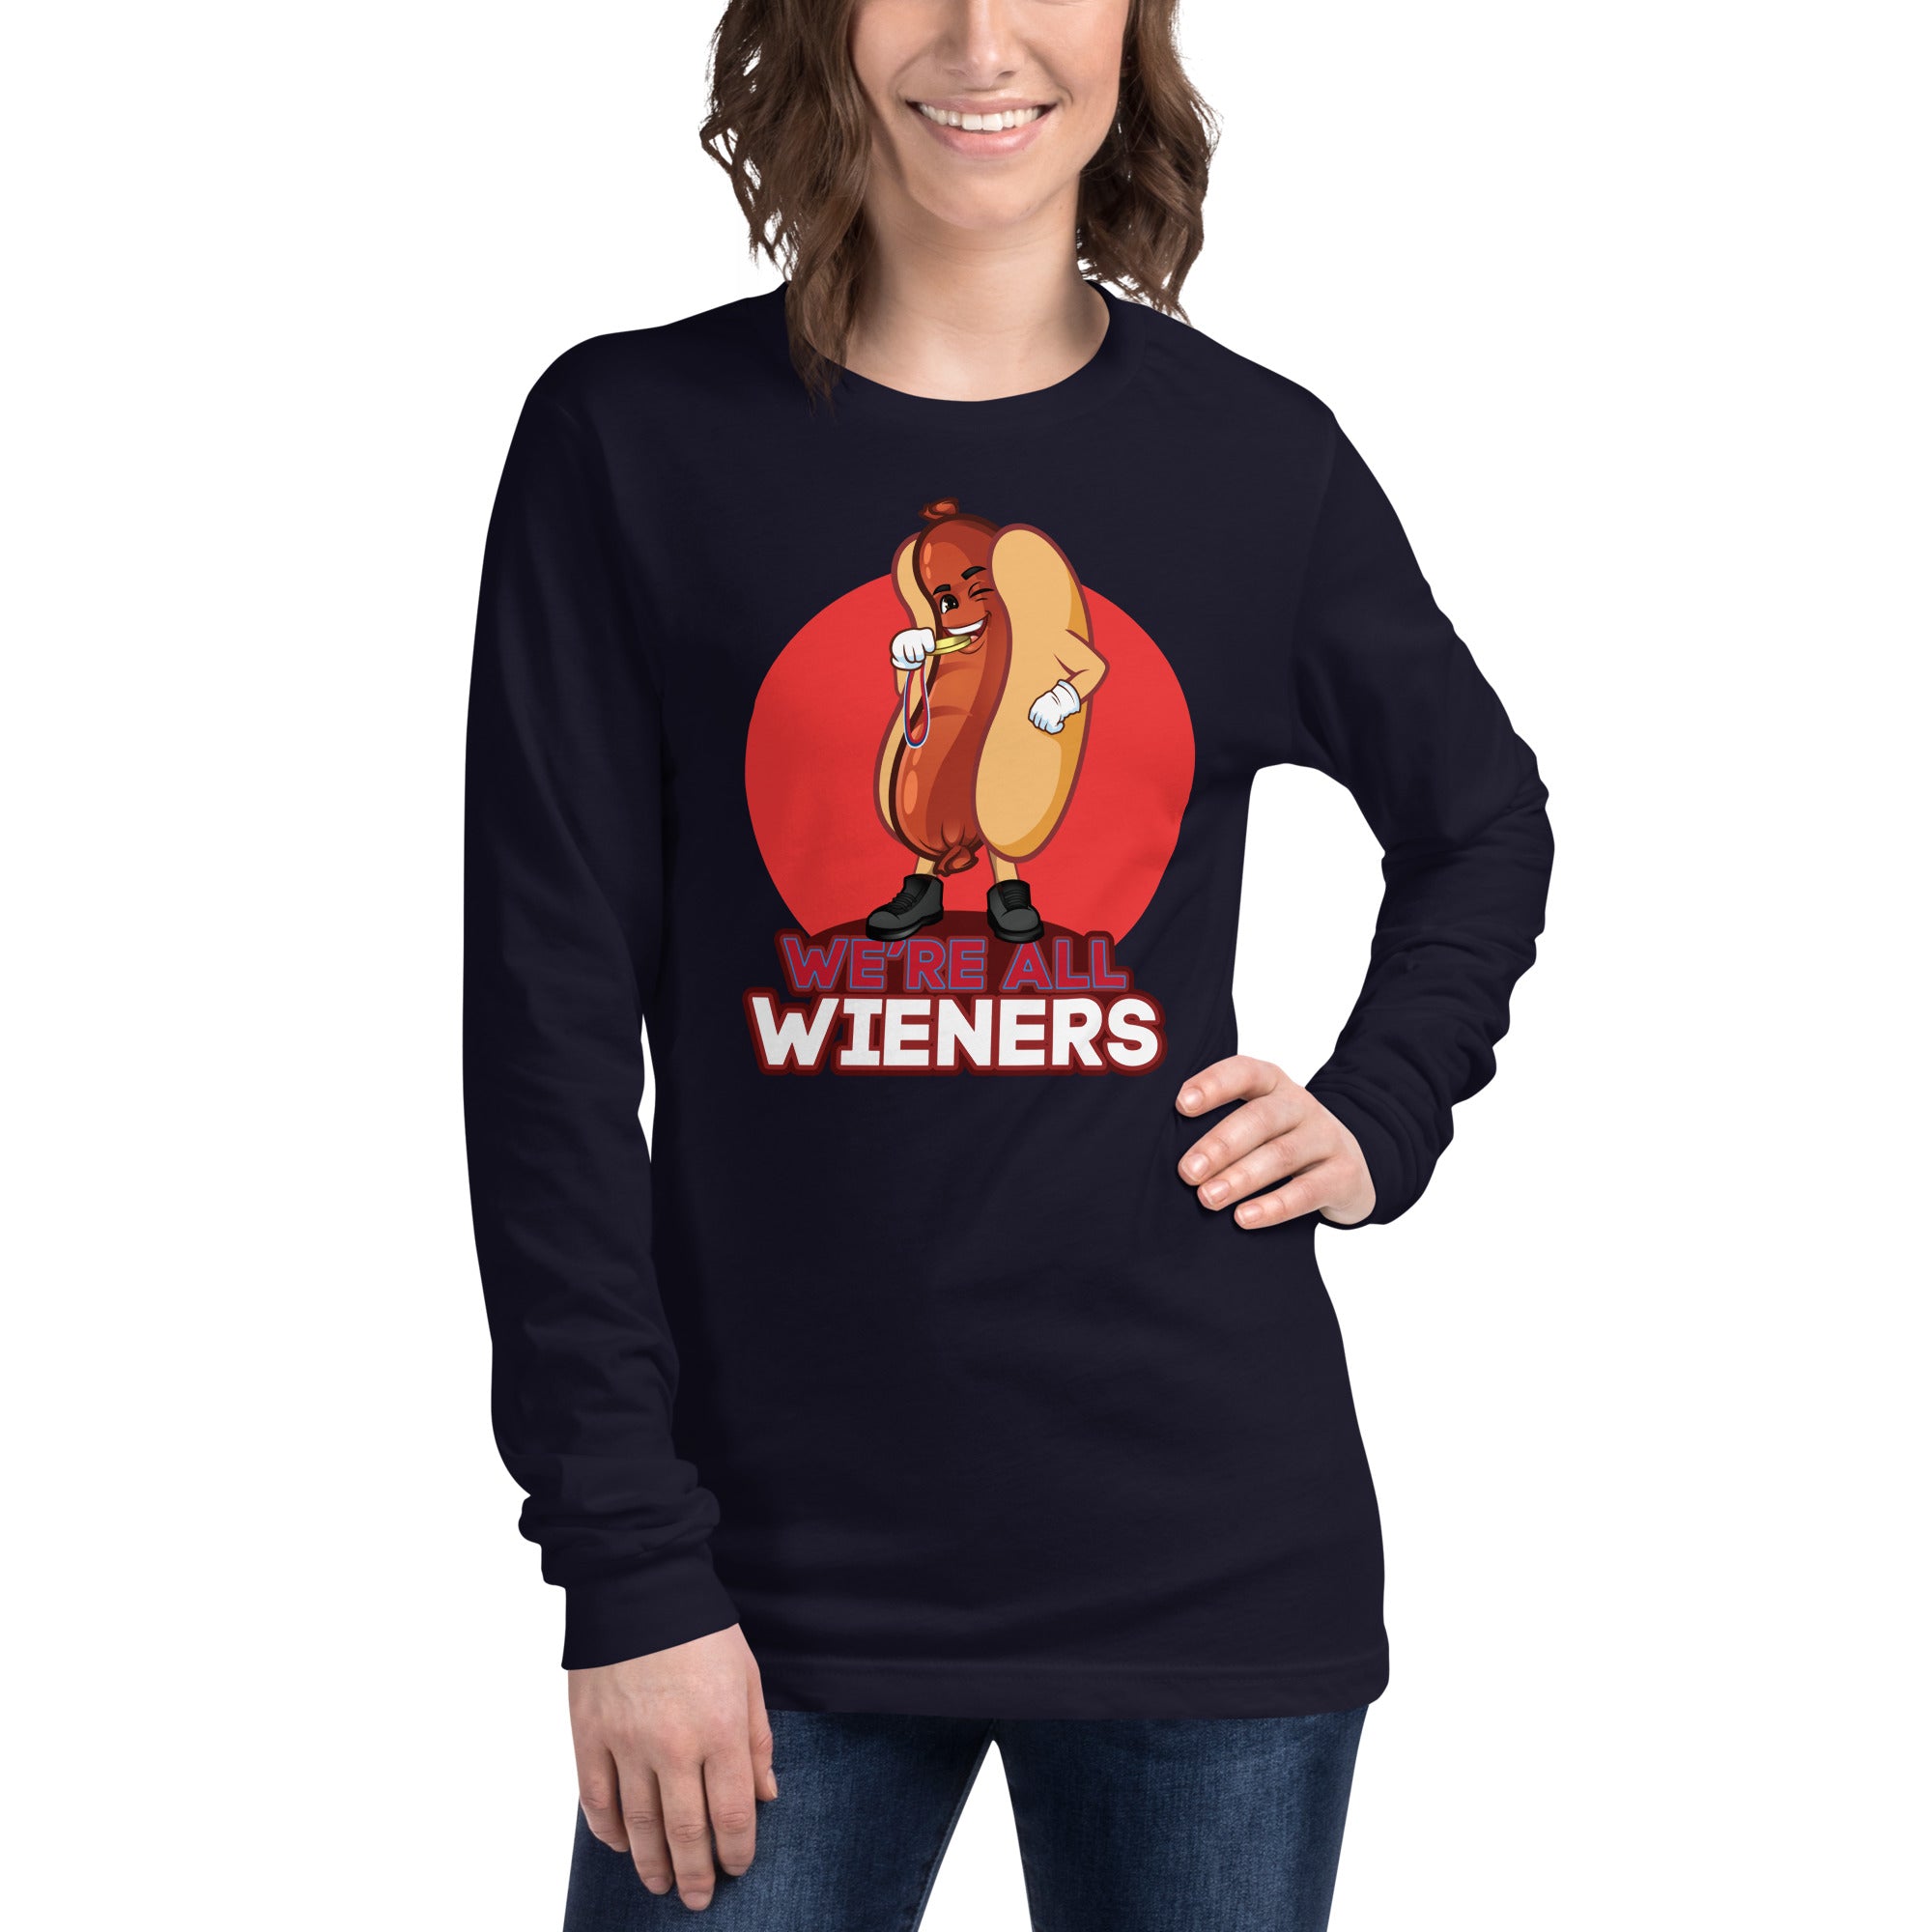 We're All Wieners Women's Select Long Sleeve - Red